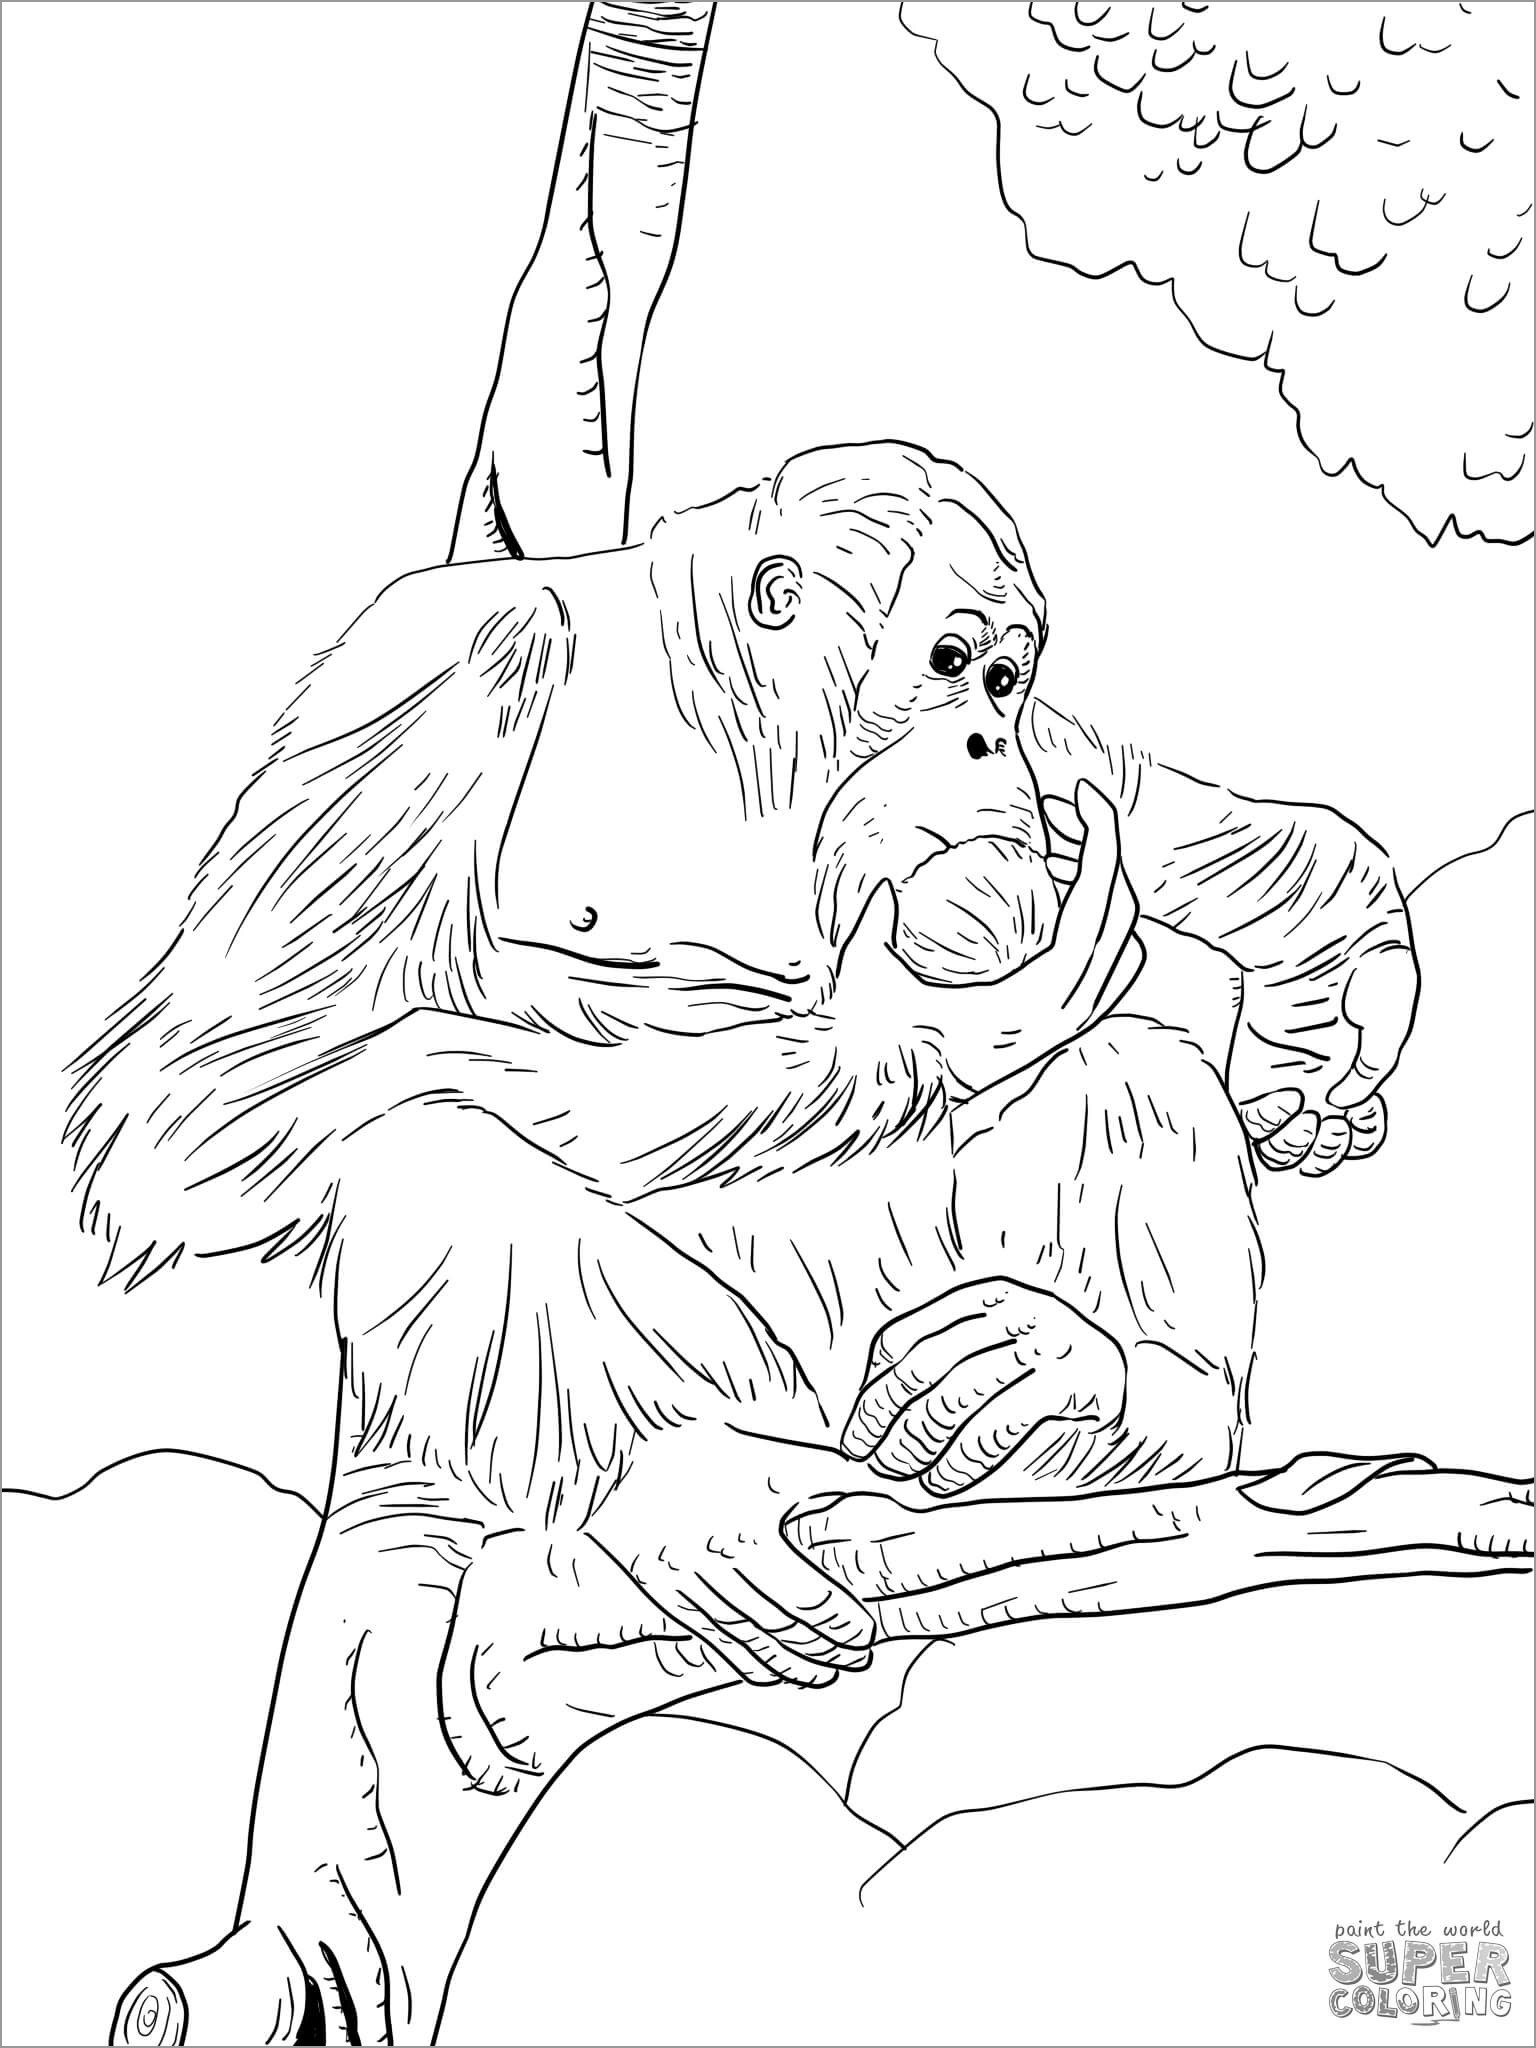 Orangutan Coloring Pages